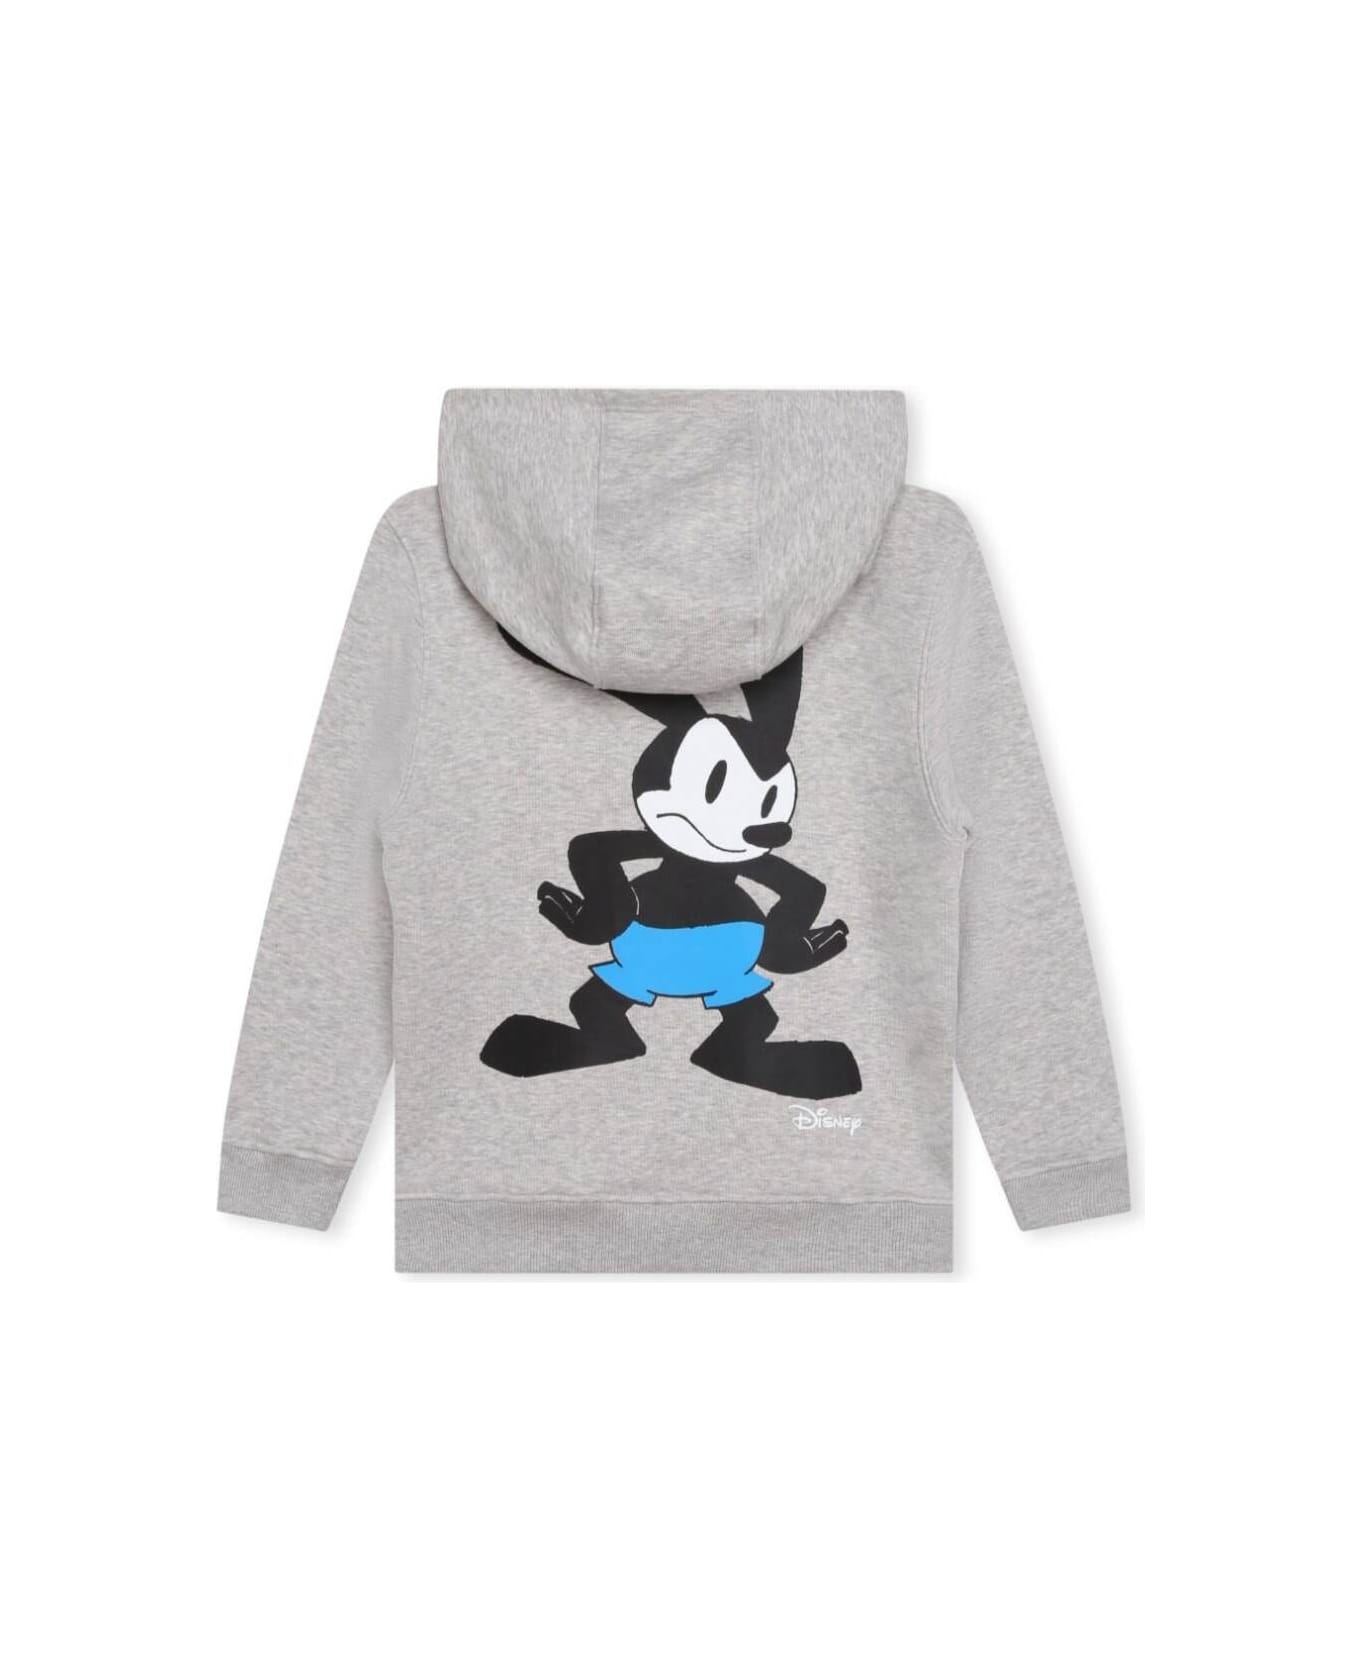 Givenchy Grey Sweatshirt With Disney X Oswald 'cartoon' Print In Cotton Blend Boy